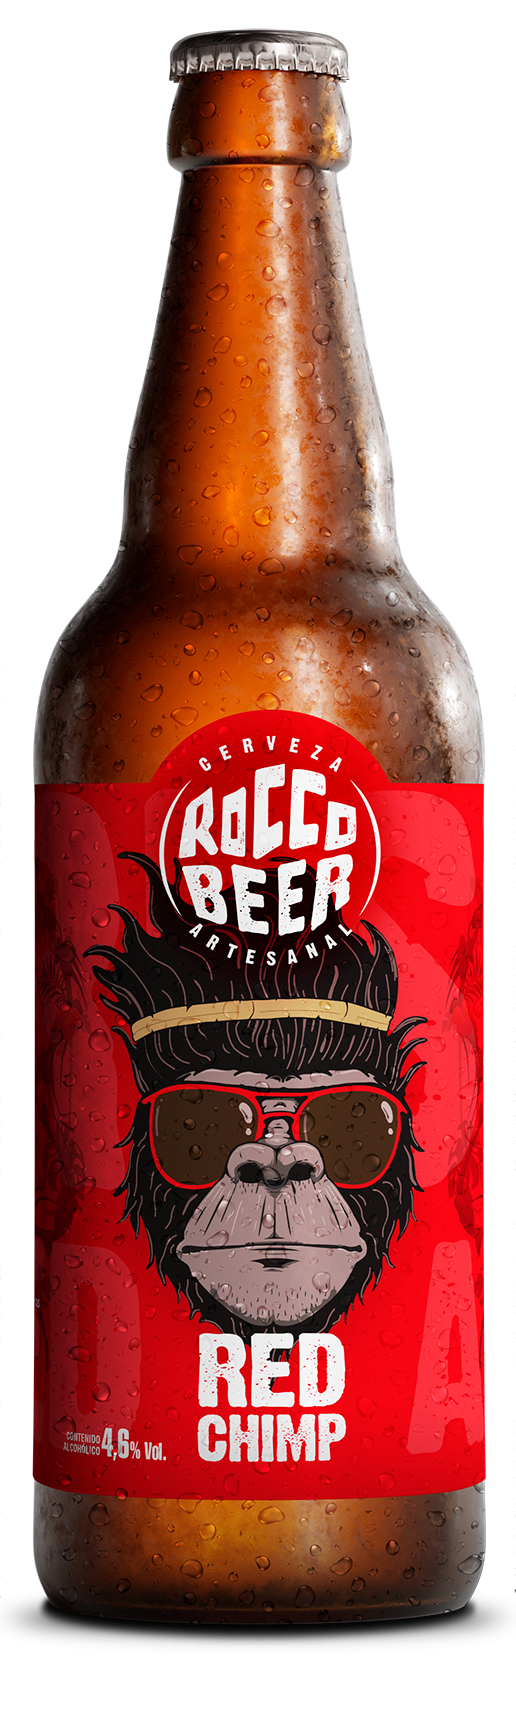 Cerveza Artesanal Rocco Beer 500cc Red Chimp botella